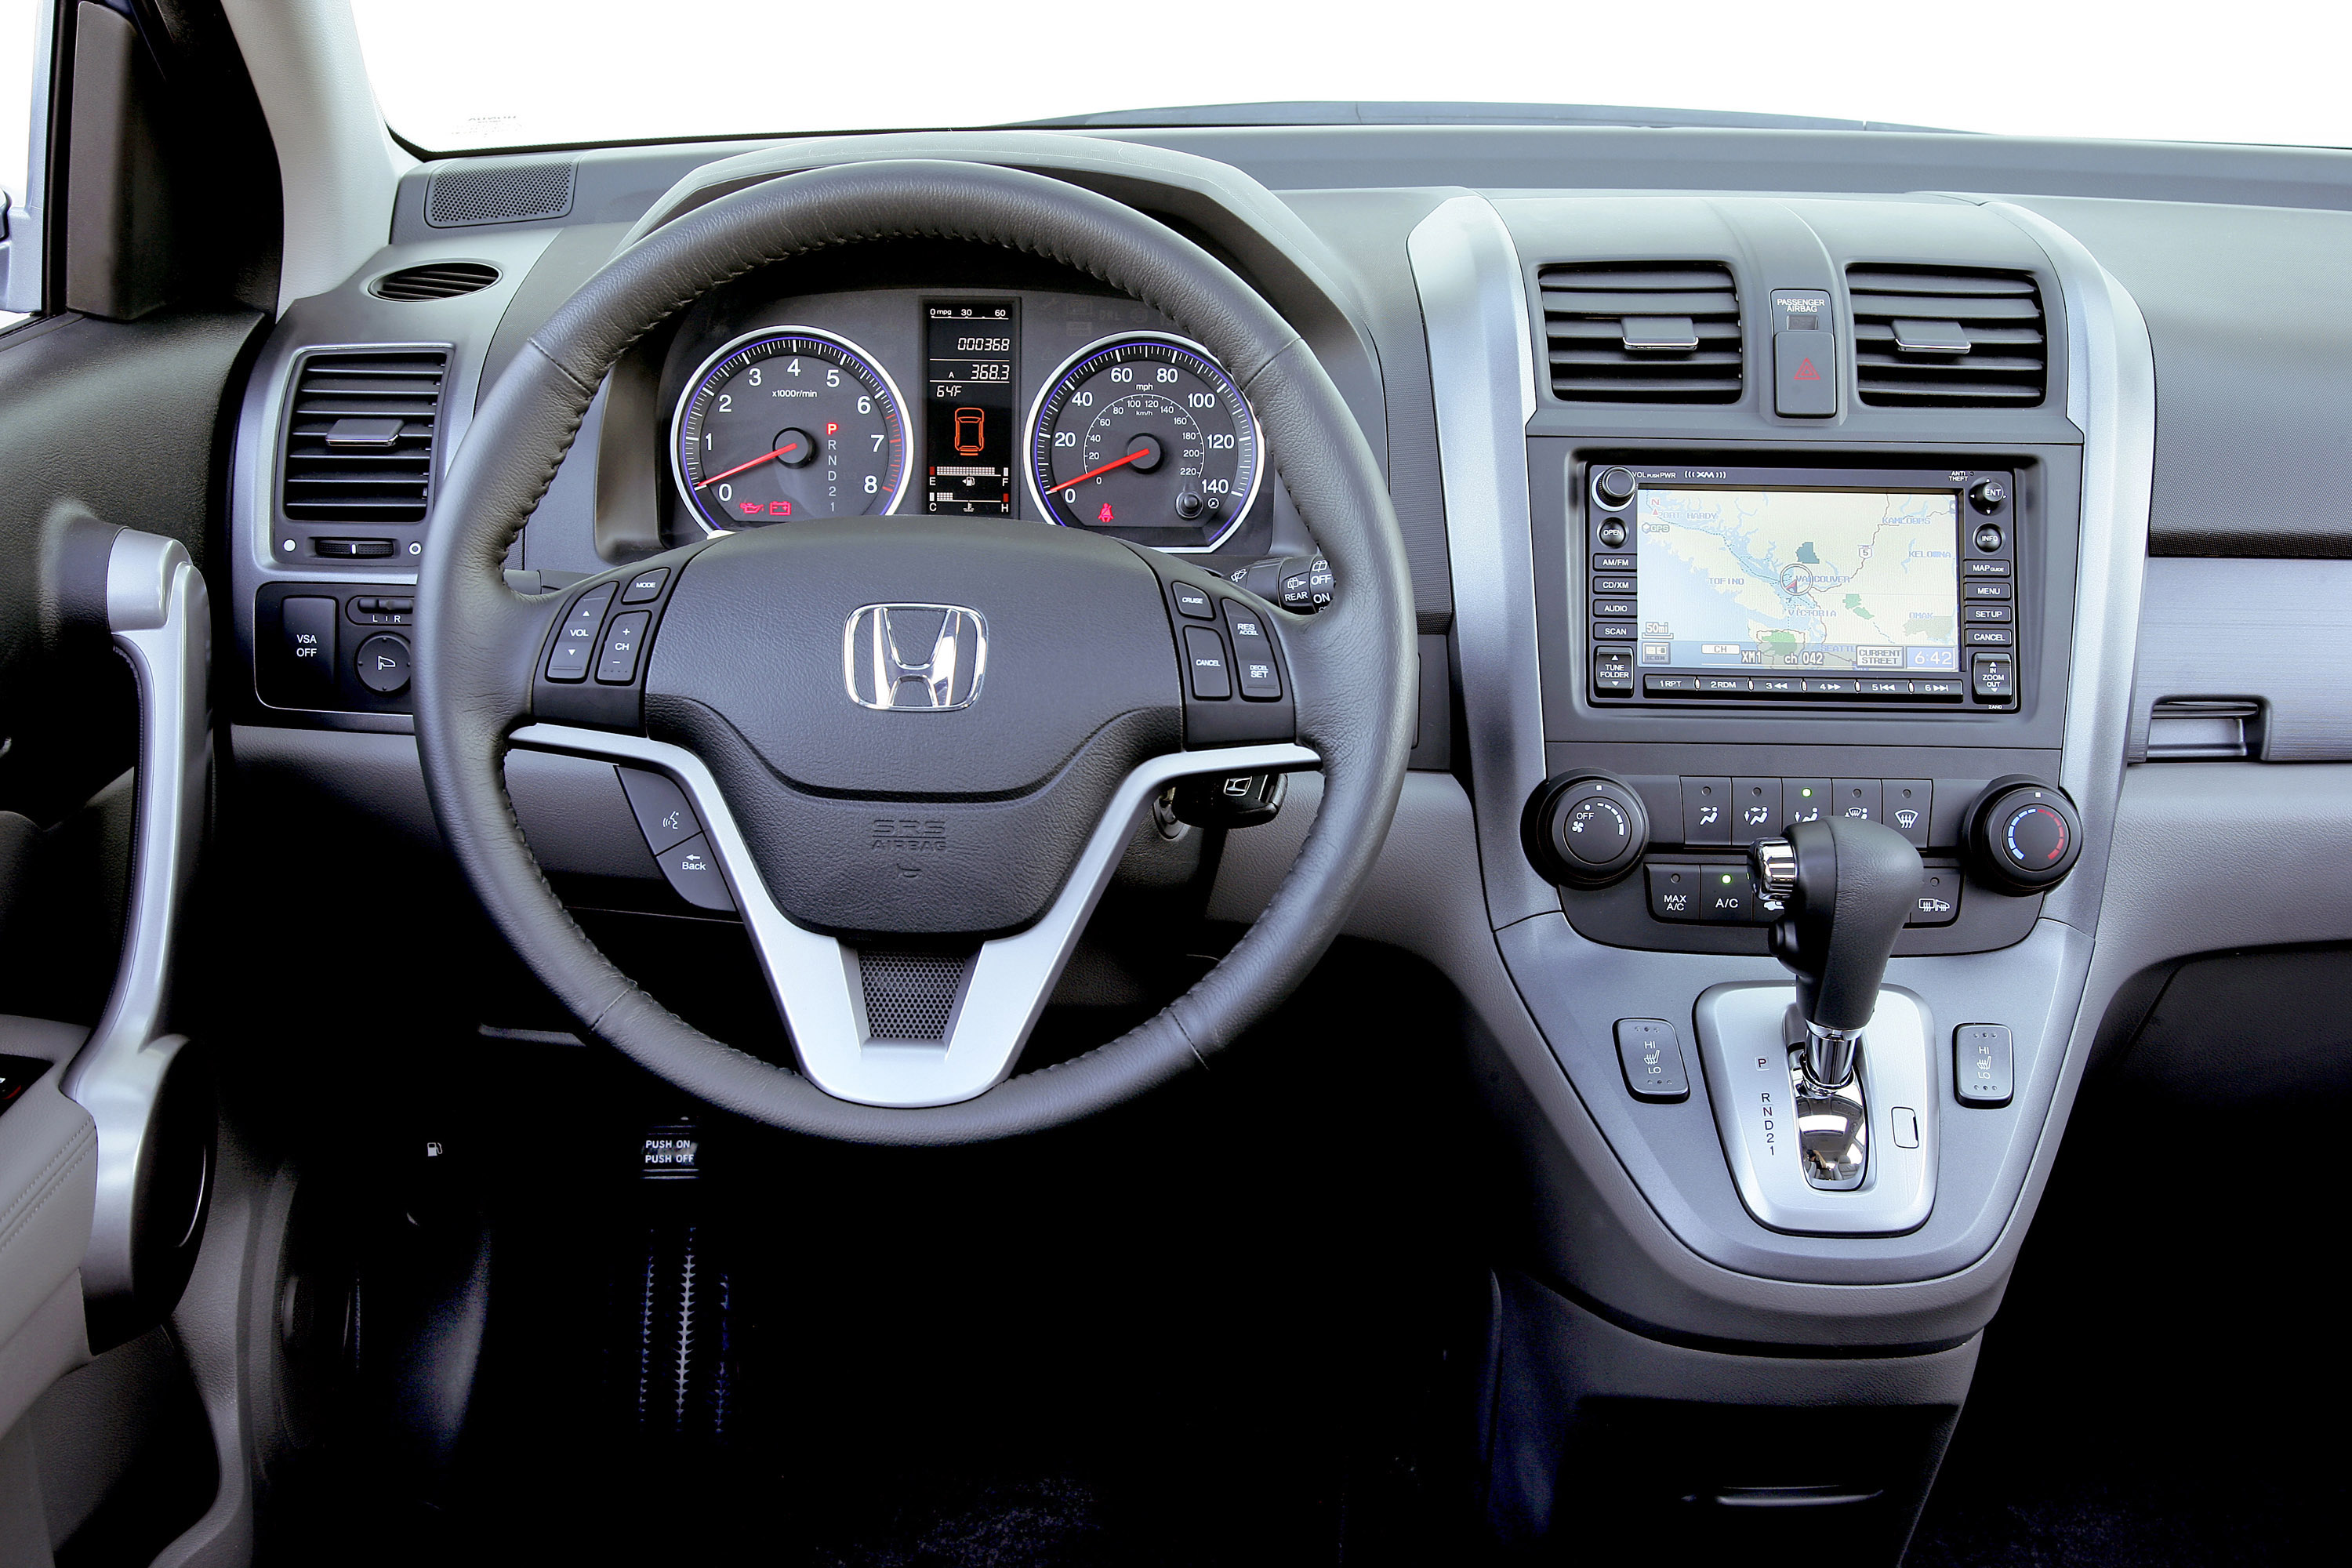 Honda v панель. Honda CR-V 2007 Interior. Honda CR-V панель 2008. Honda CRV 2010 Interior. Панель управления Хонда СРВ 2008.